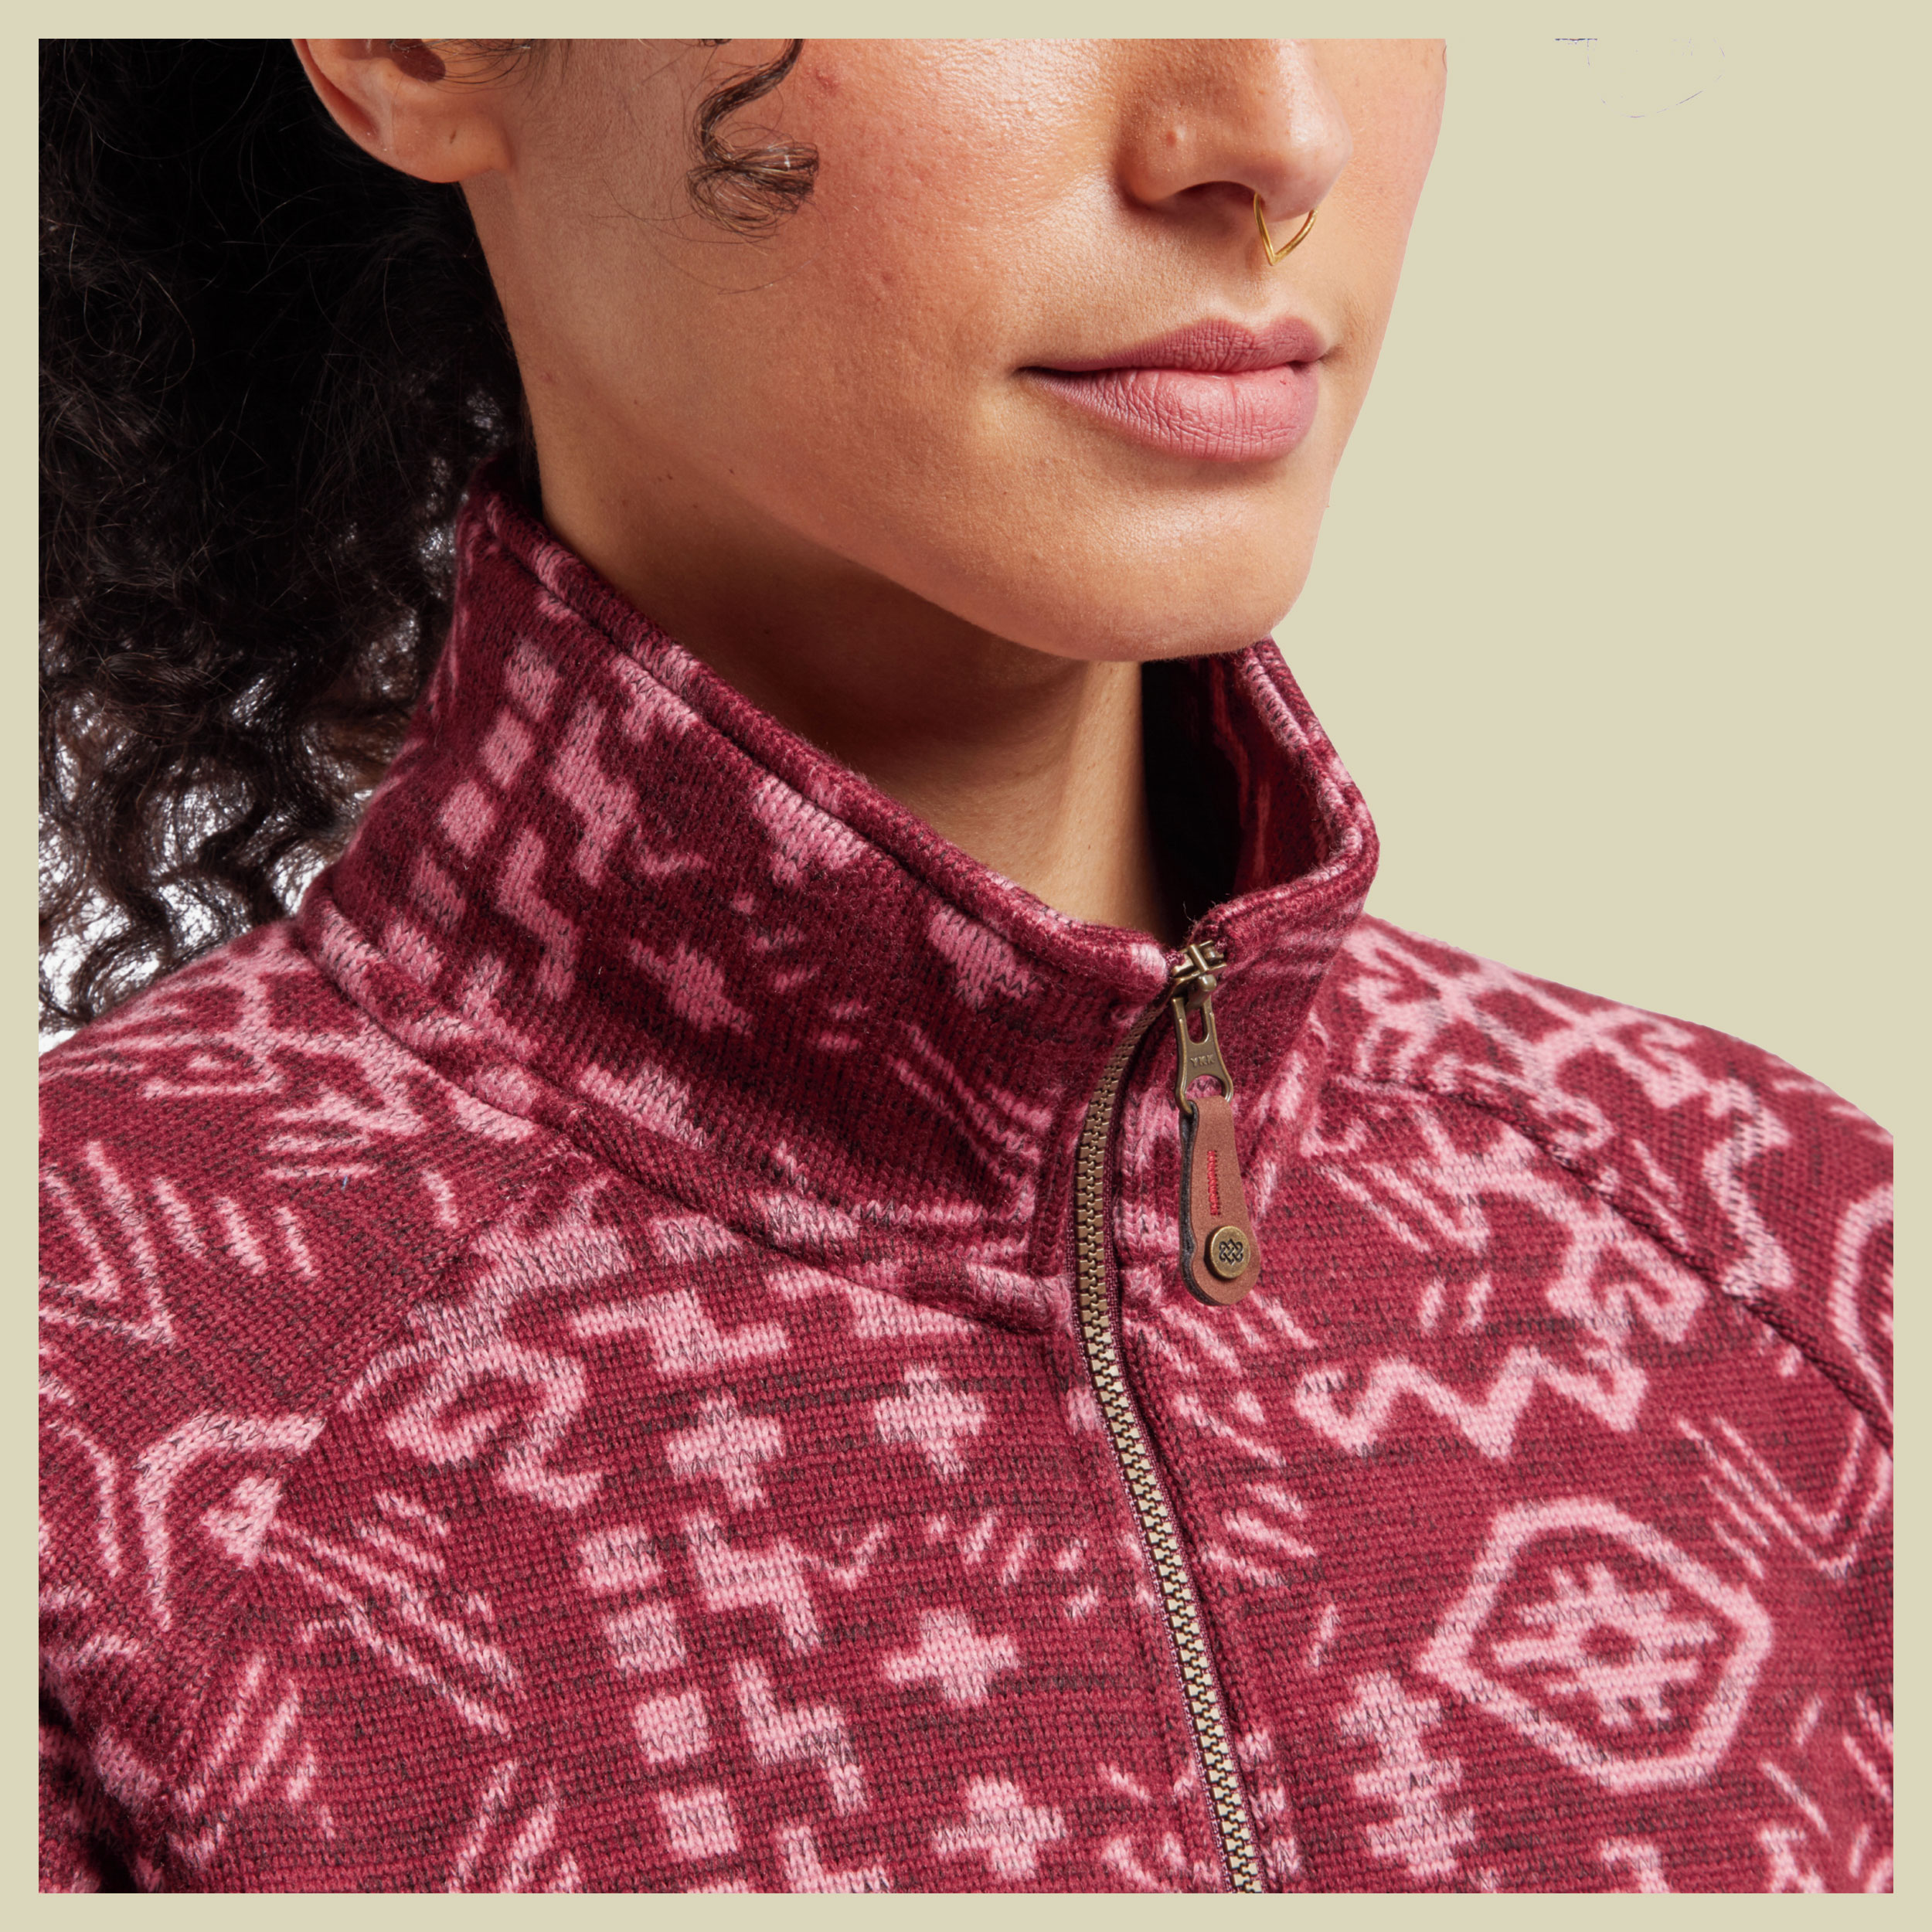 Bhutan Full Zip Jacket Women Größe M  Farbe beet red abstract